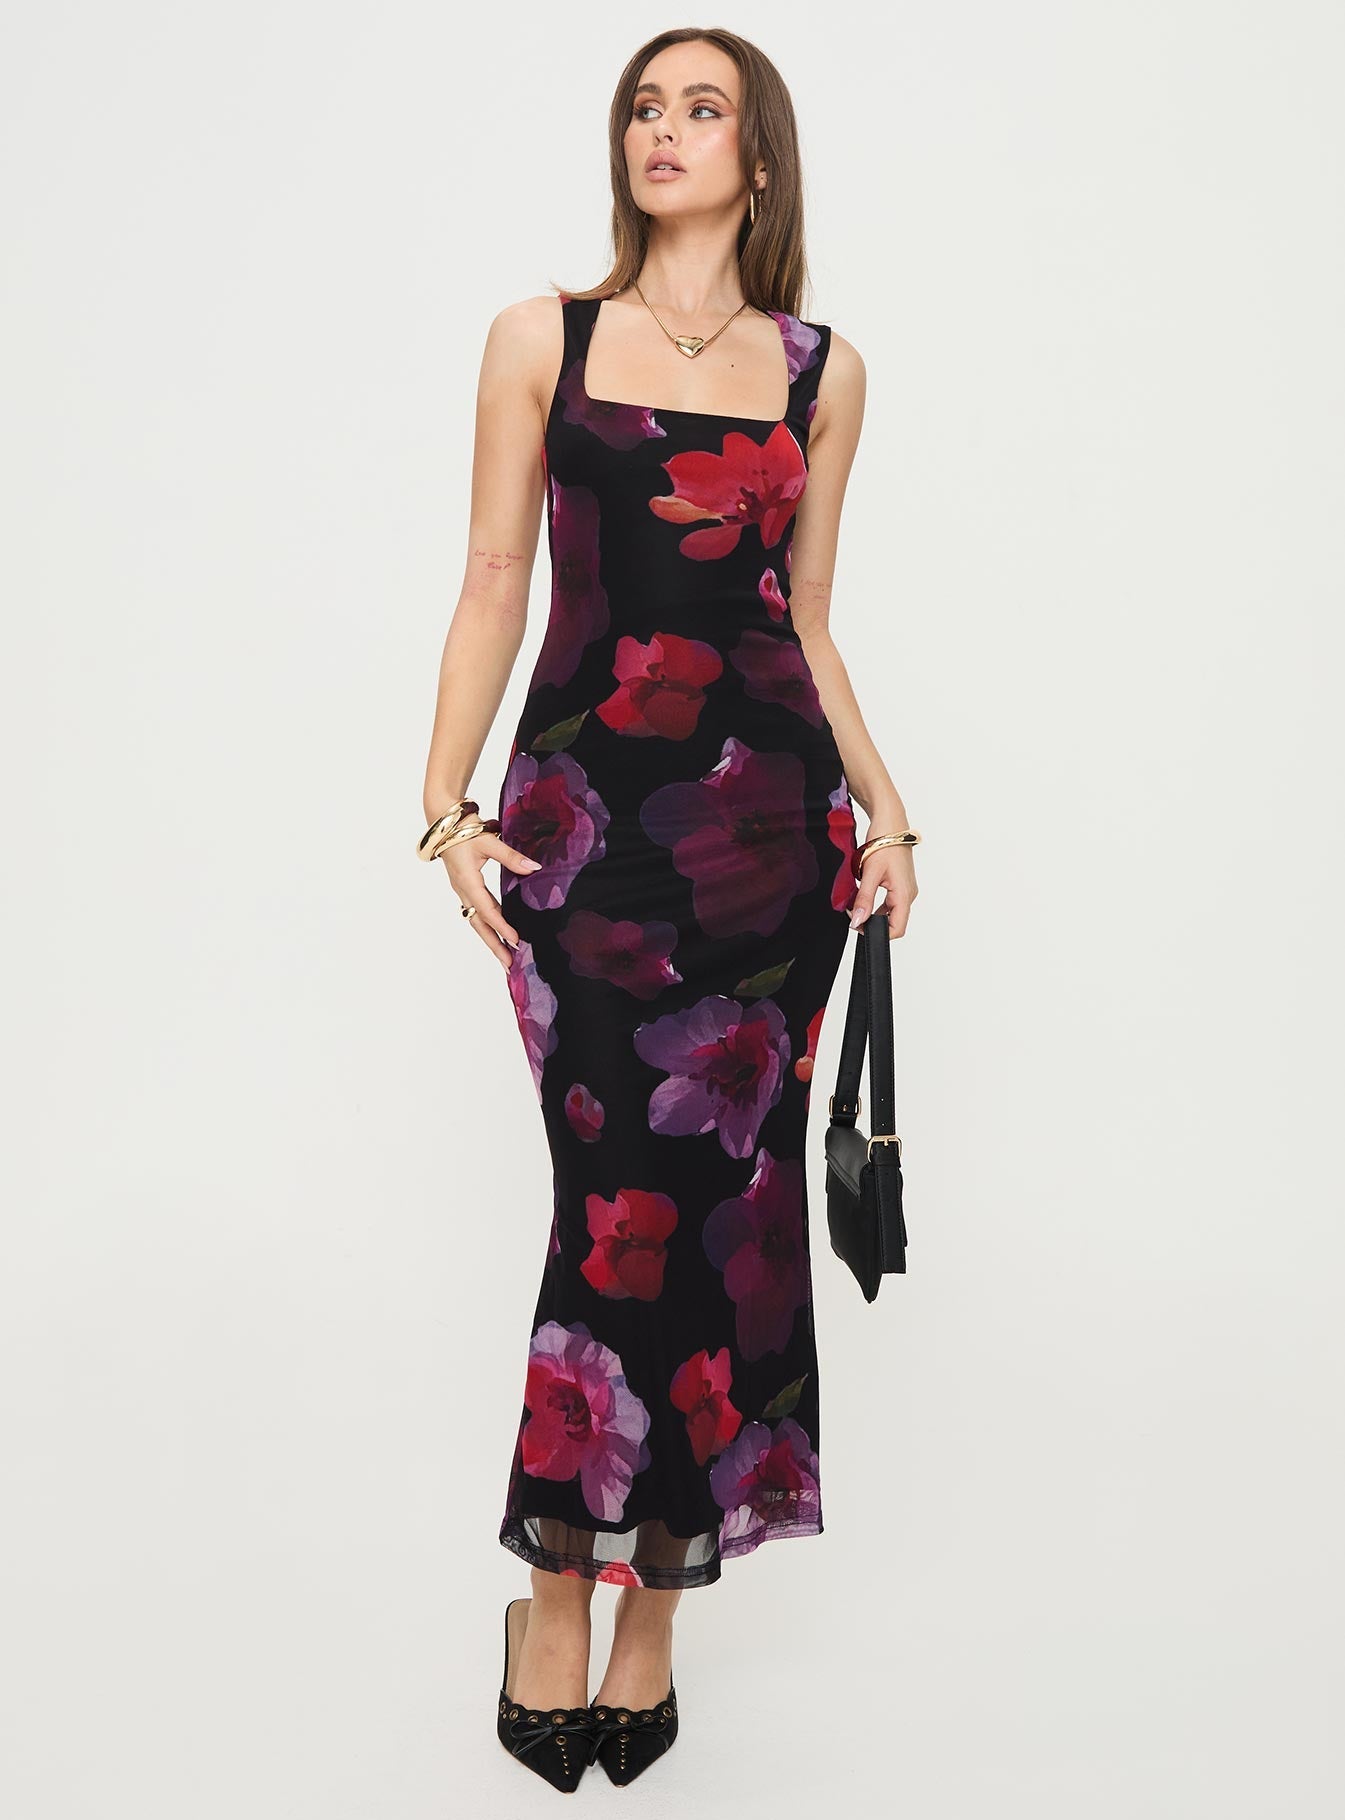 Shop Formal Dress - Eviana Maxi Dress Floral sixth image